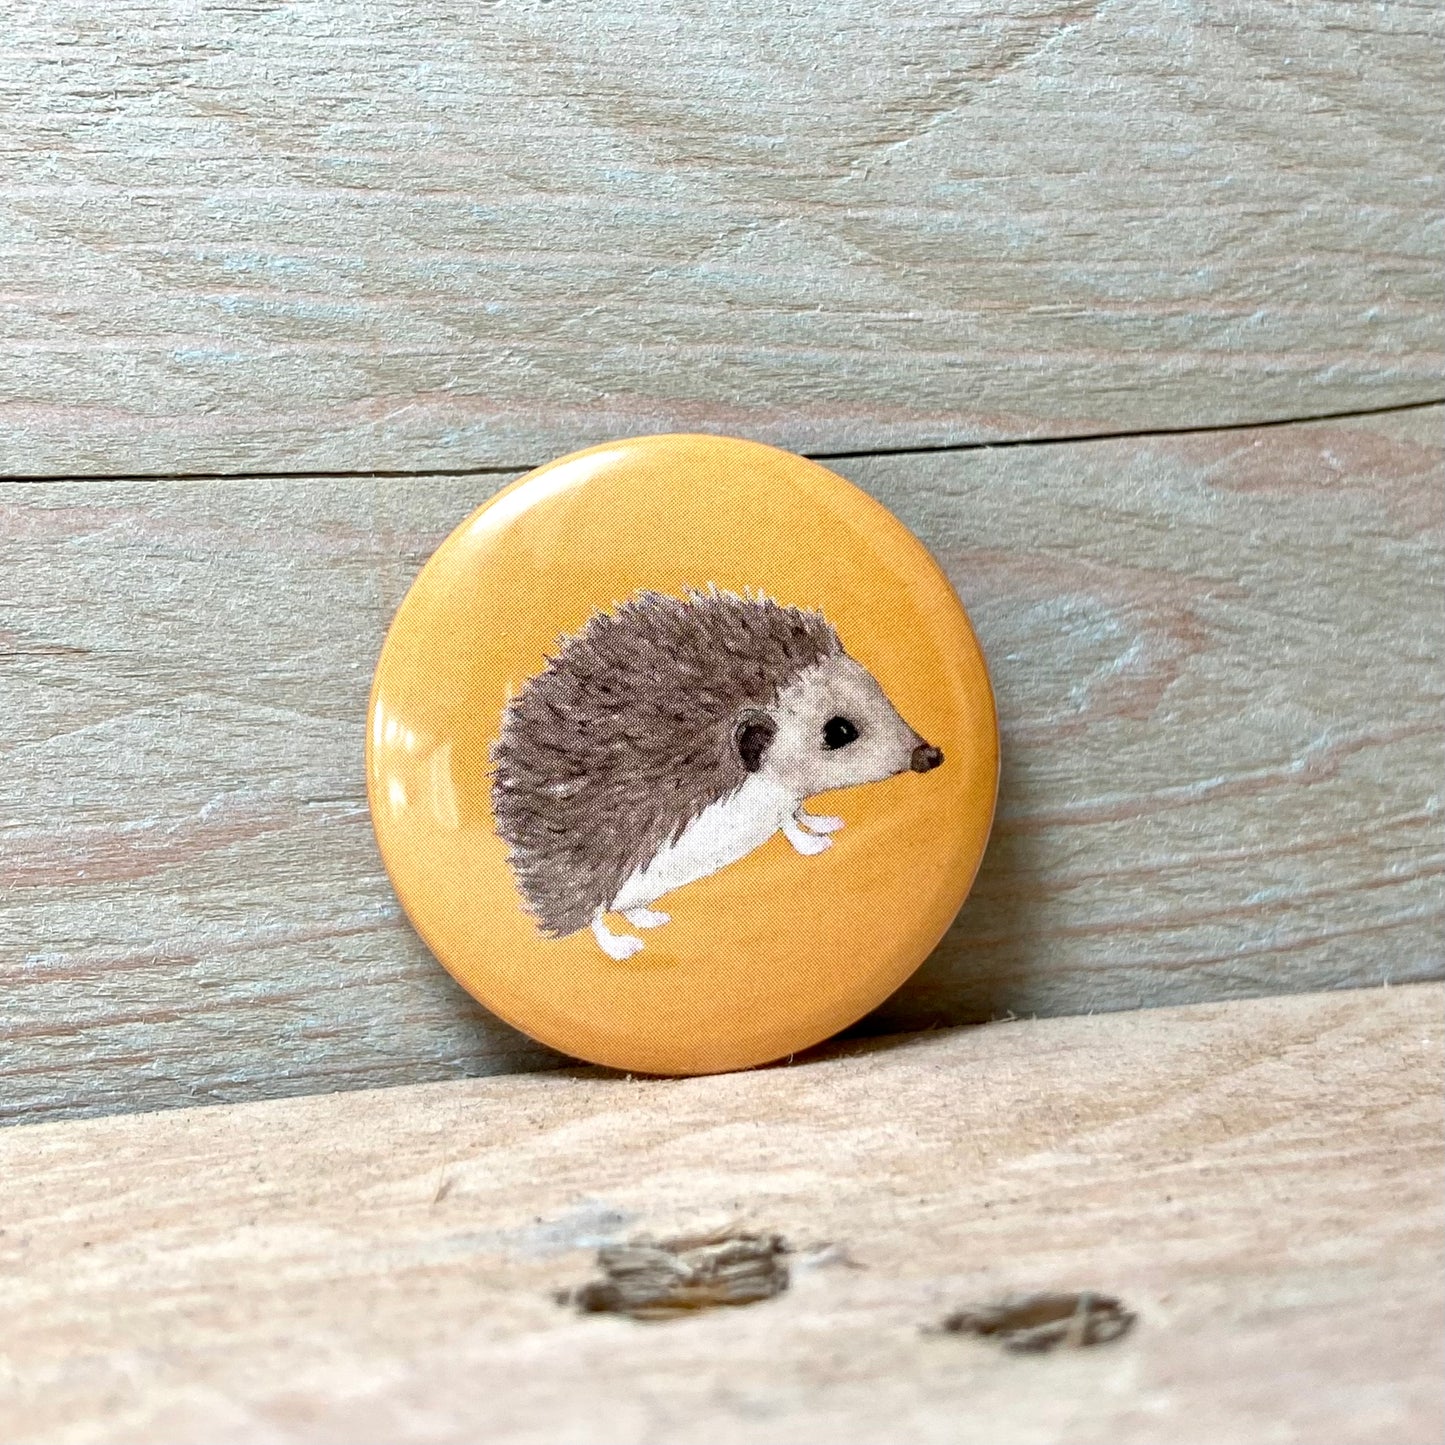 Heston the Hedgehog Pin Badge